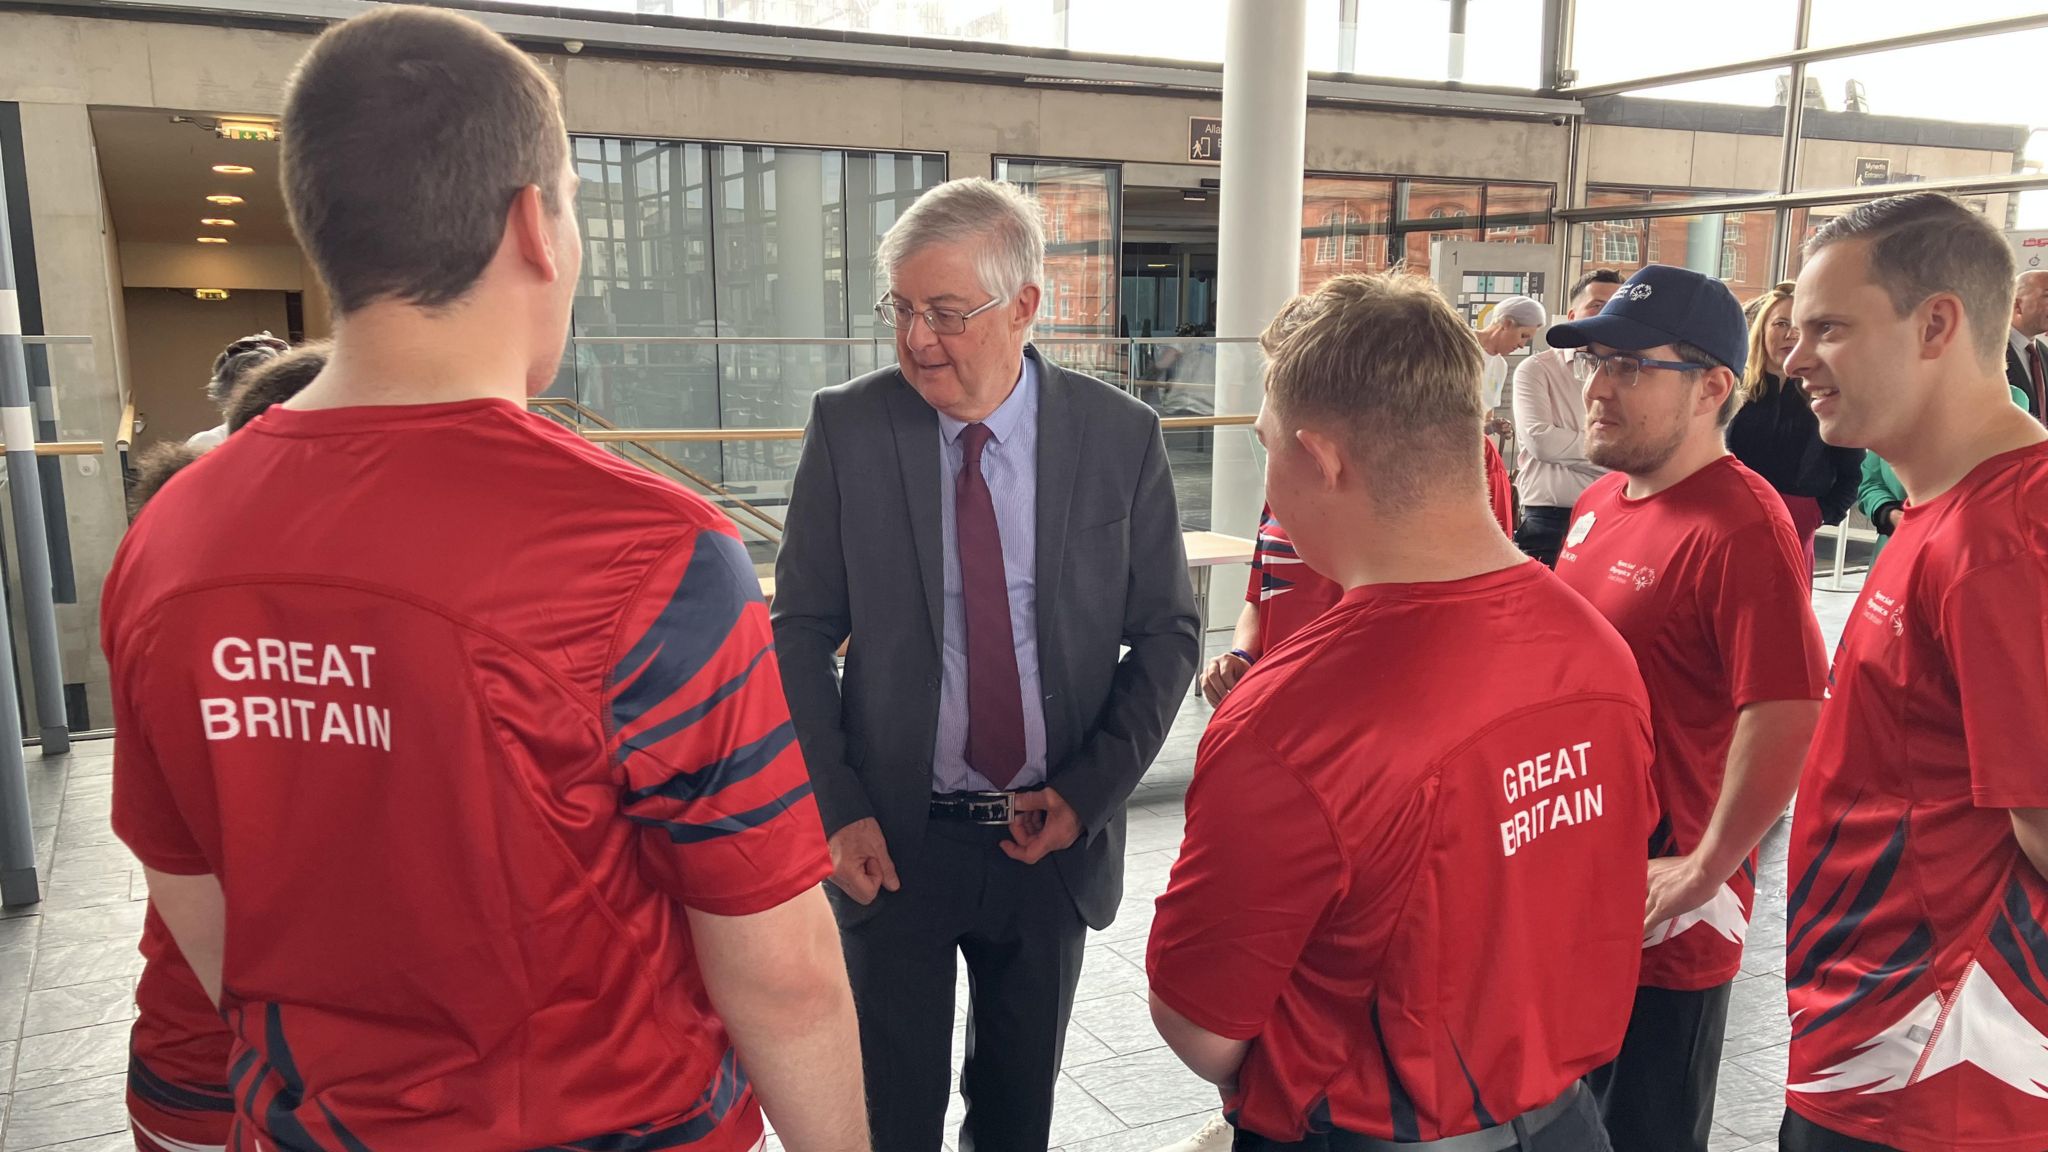 Team GB athletes meeting First Minister Mark Drakeford at the Senedd